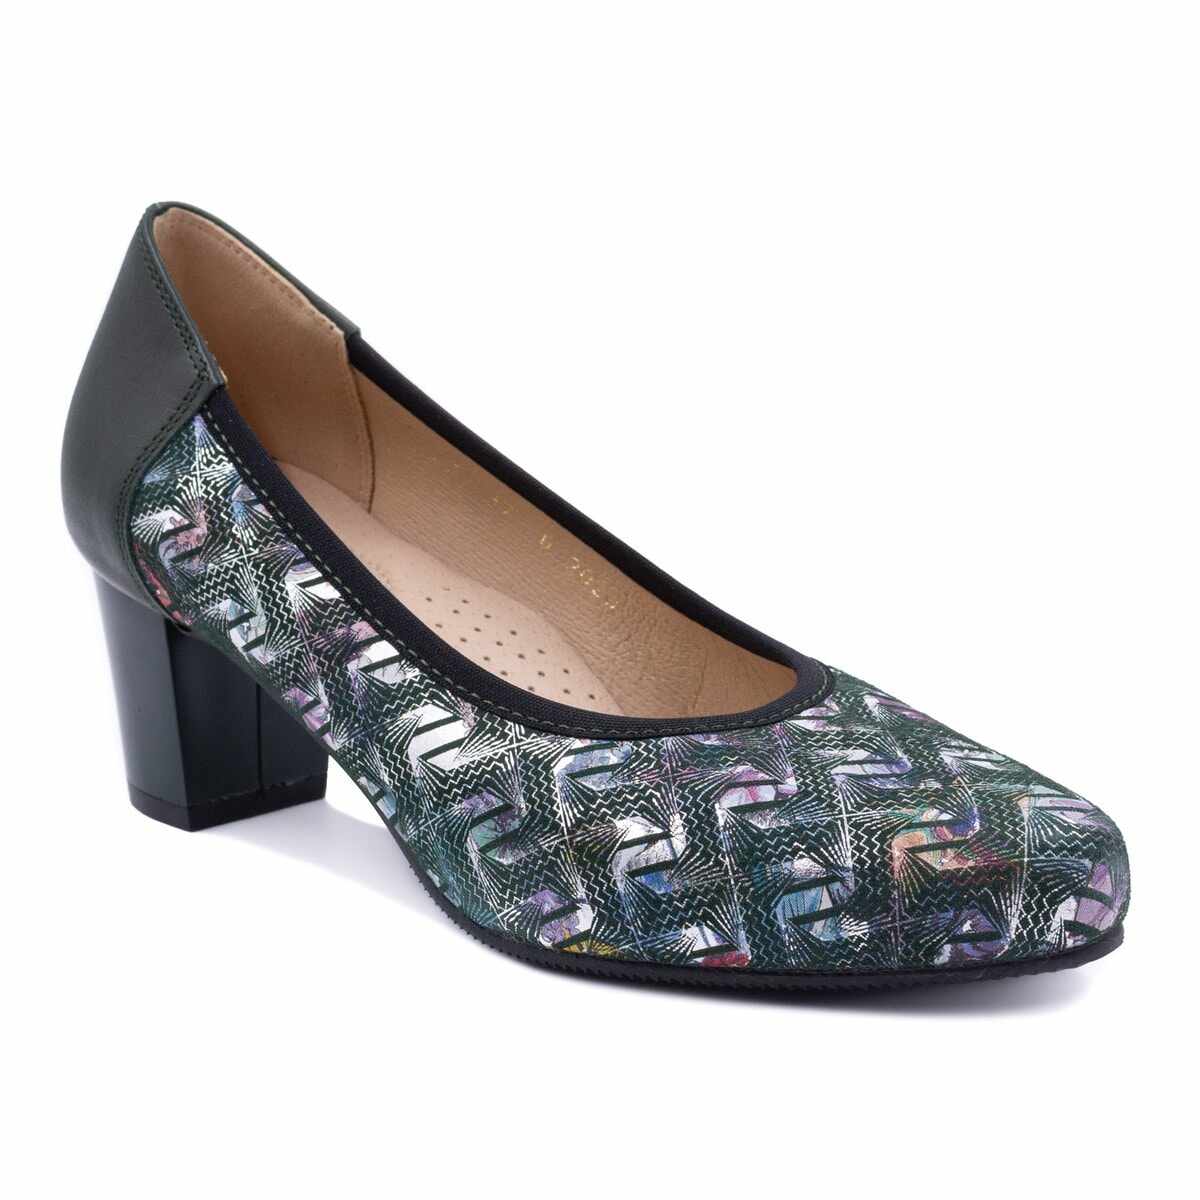 Pantofi eleganti dama, Beatrixx, din piele naturala imprimata cu motive colorate, culoare verde, cod AF-372